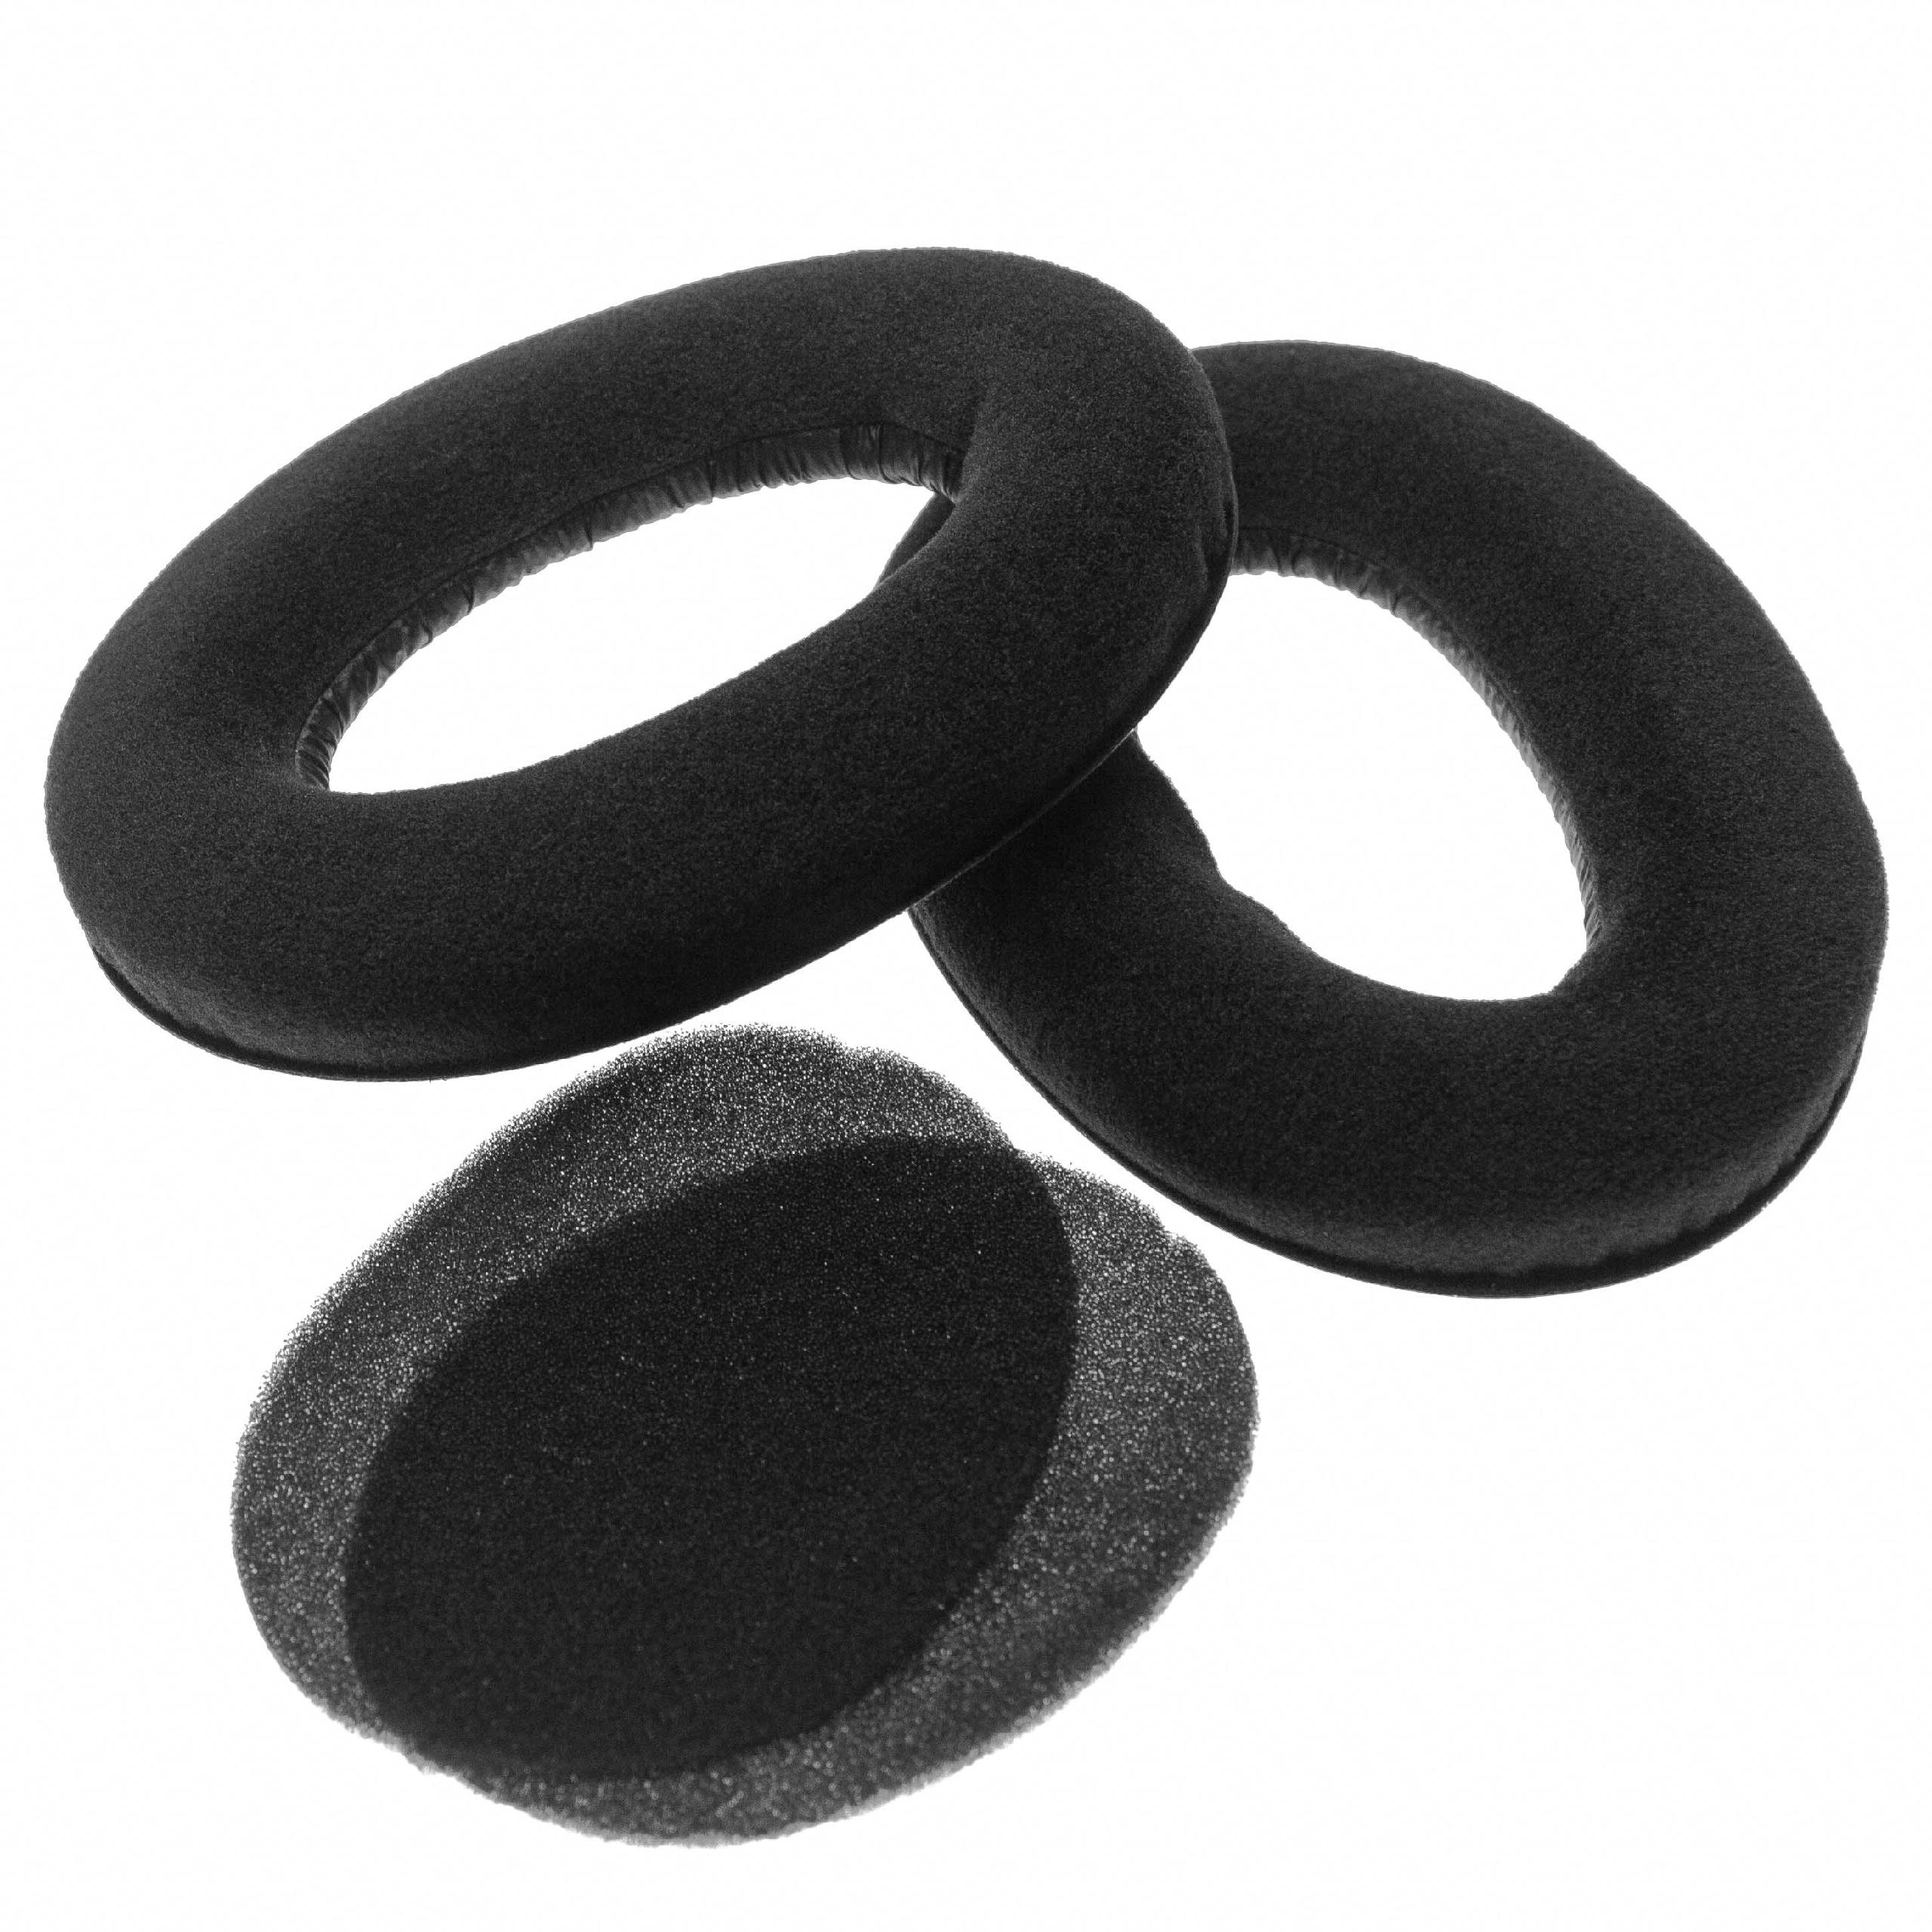 Ear Pads suitable for Sennheiser HD515 Headphones etc. - foam, 20 mm thick